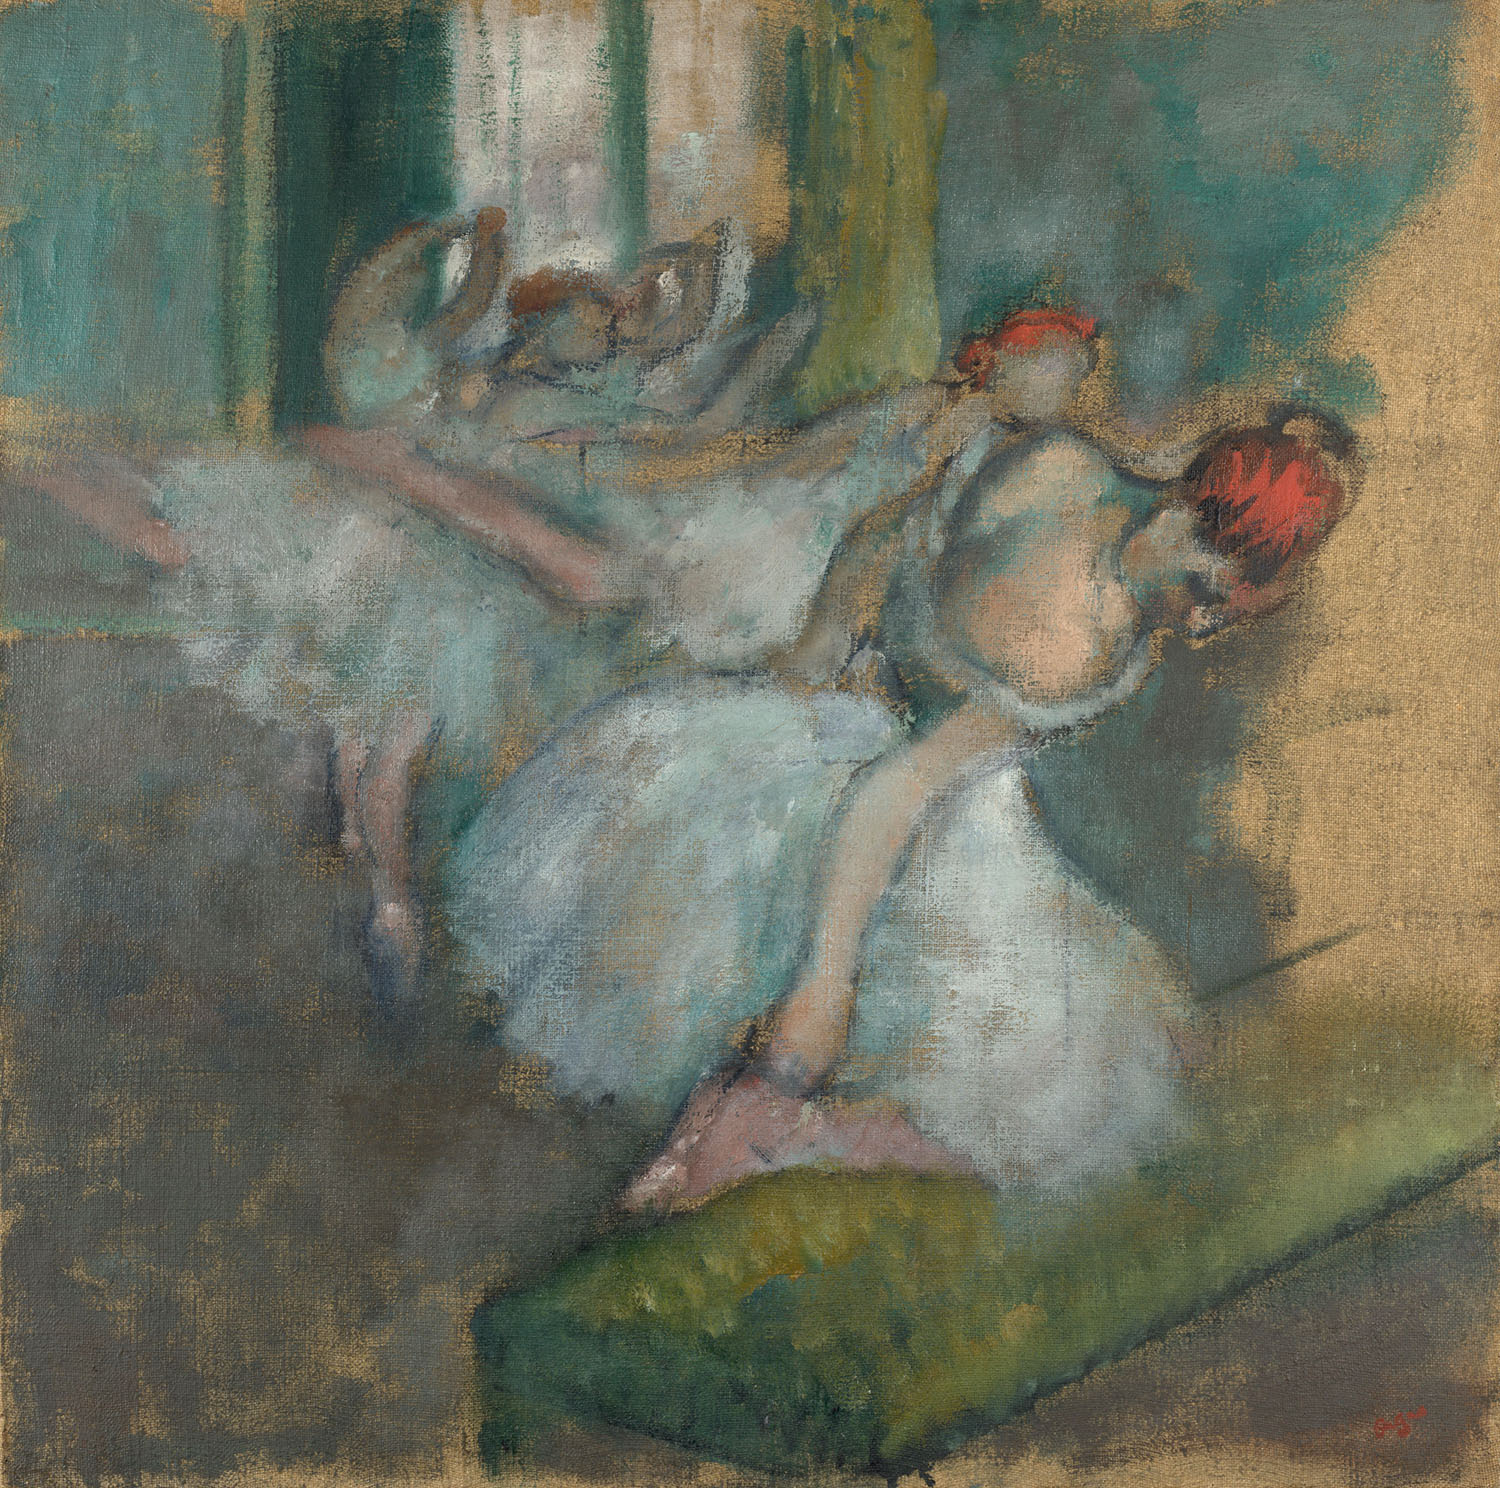 Эдгар Дега. "Балерины". 1890-1900.